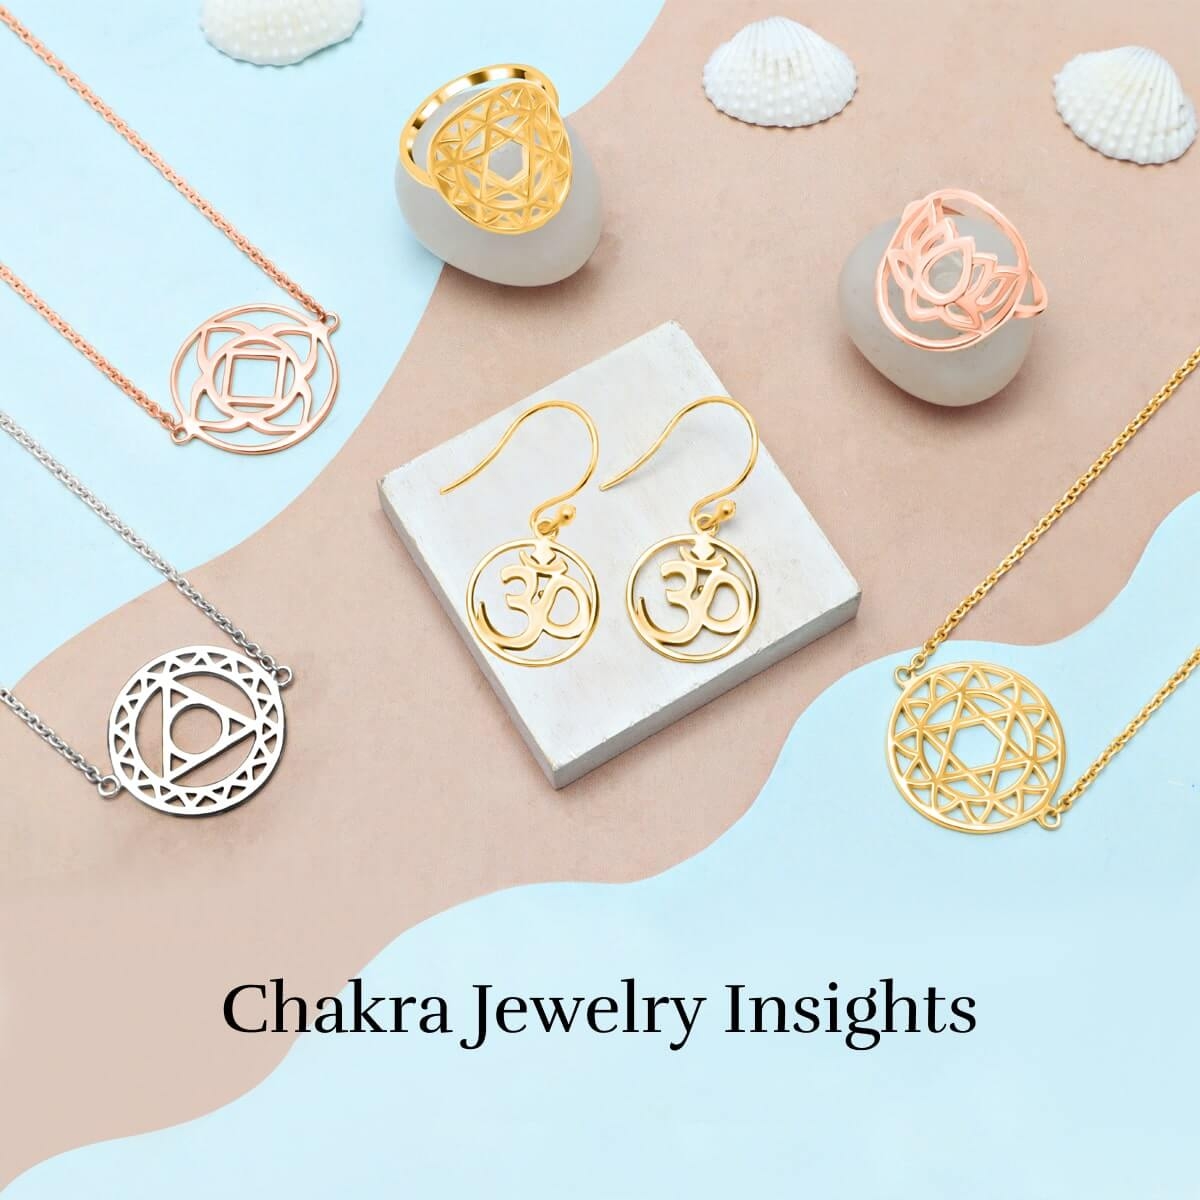 Chakra Jewelry: Colors, Healing Properties And Benefits